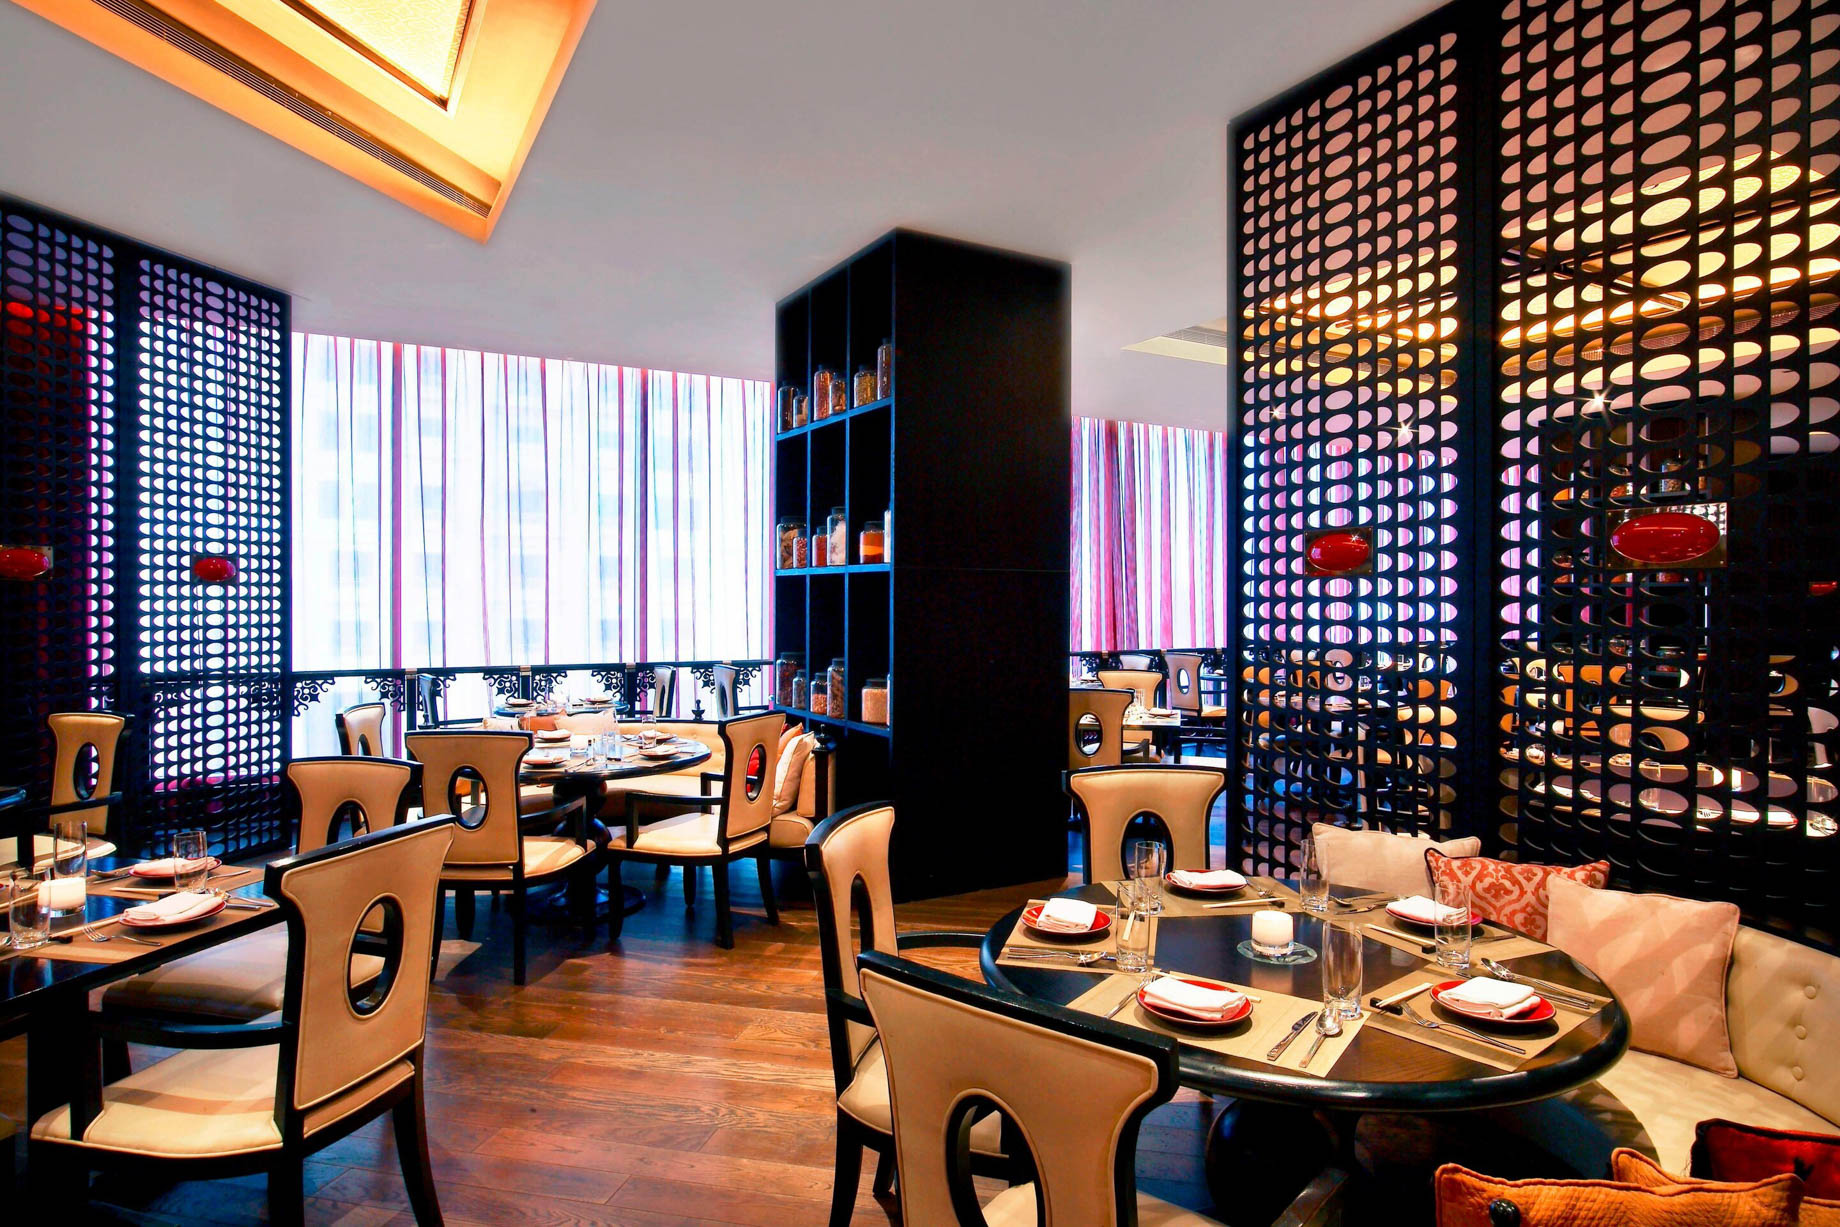 W Doha Hotel – Doha, Qatar – Spice Market Restaurant Decor